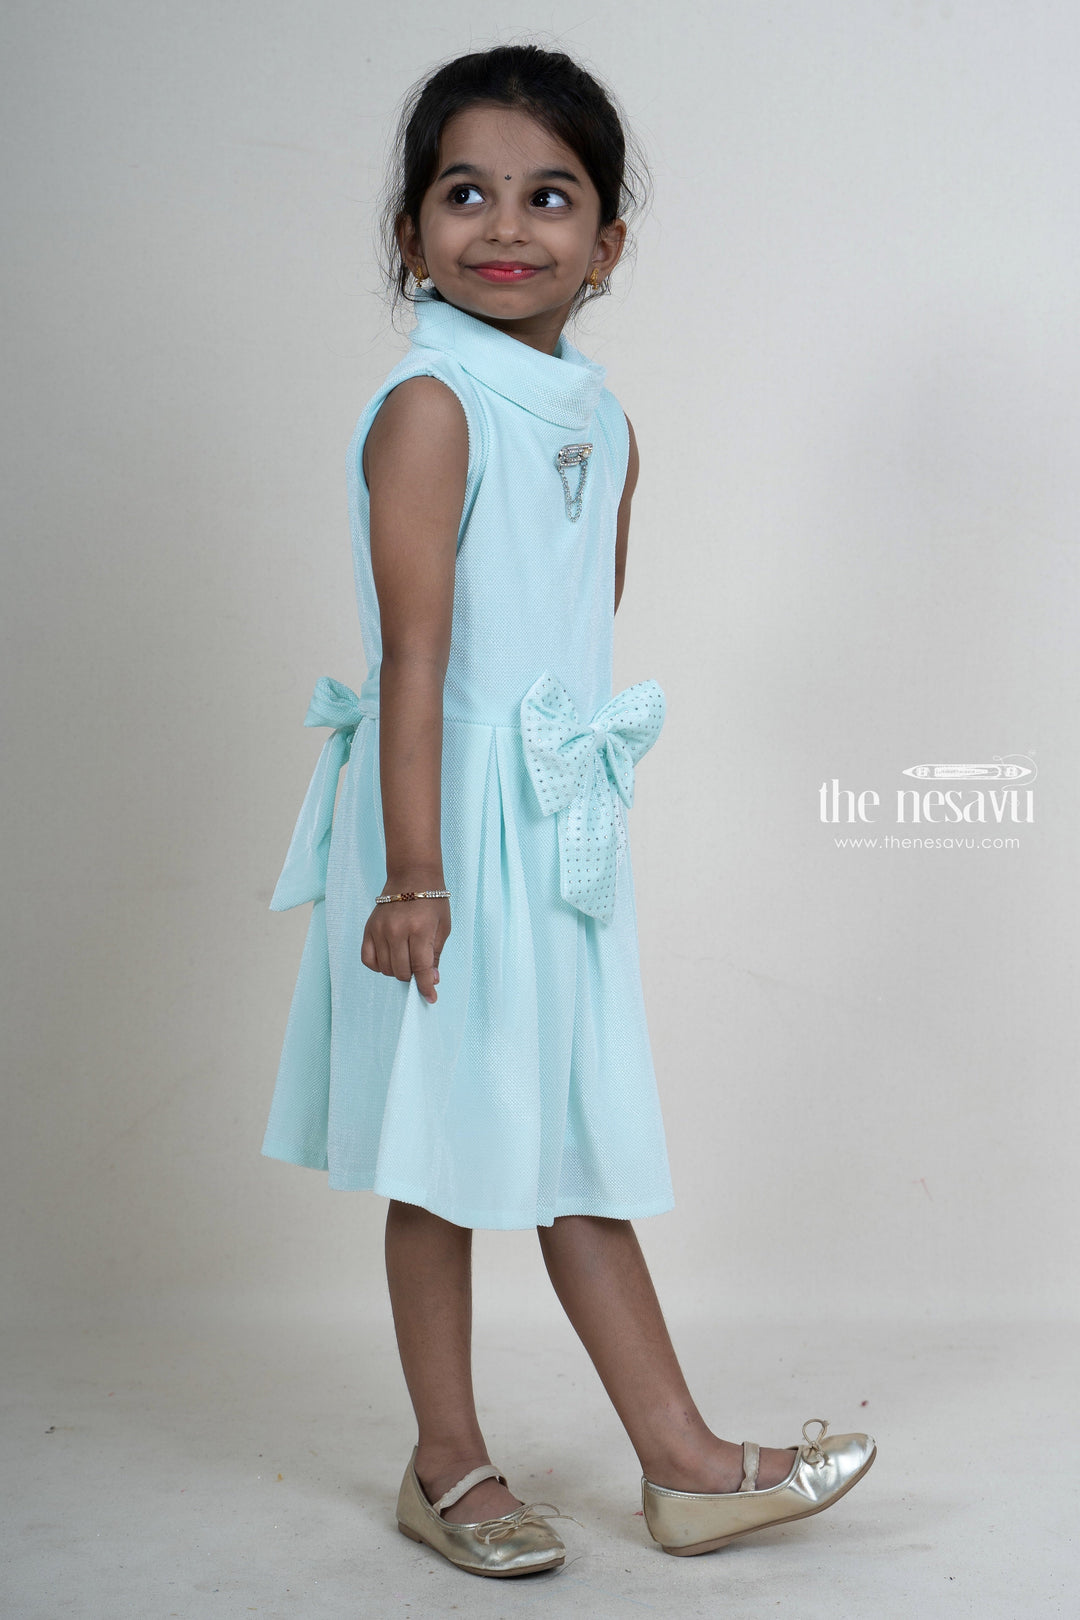 The Nesavu Baby Frock / Jhabla Skyblue Velvet Designer Bow Embellished Party Wear Dresses For Girls psr silks Nesavu